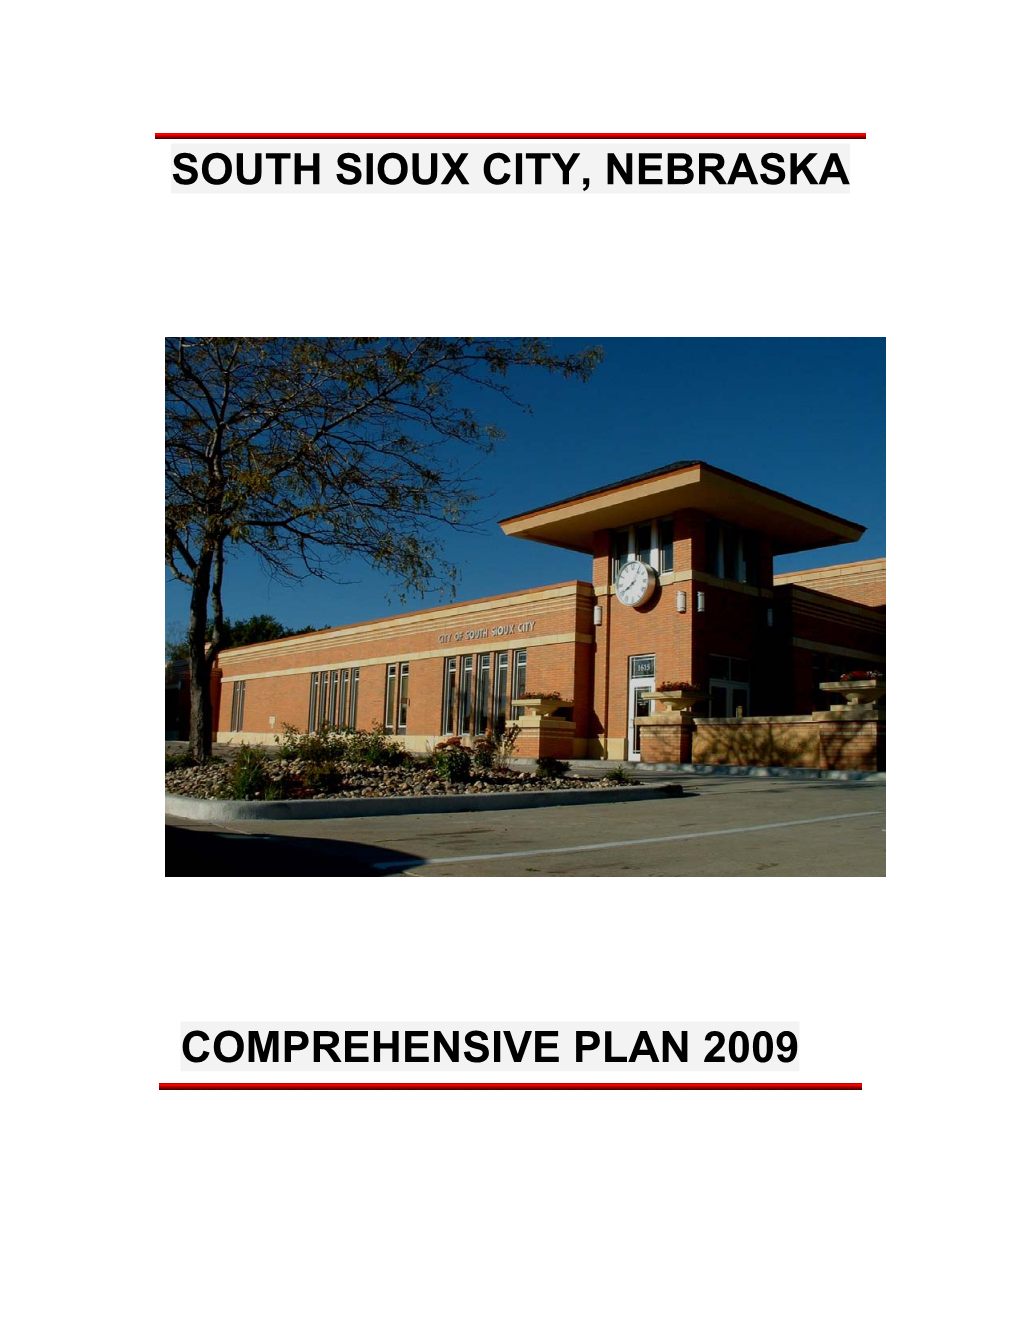 South Sioux City, Nebraska Comprehensive Plan 2009